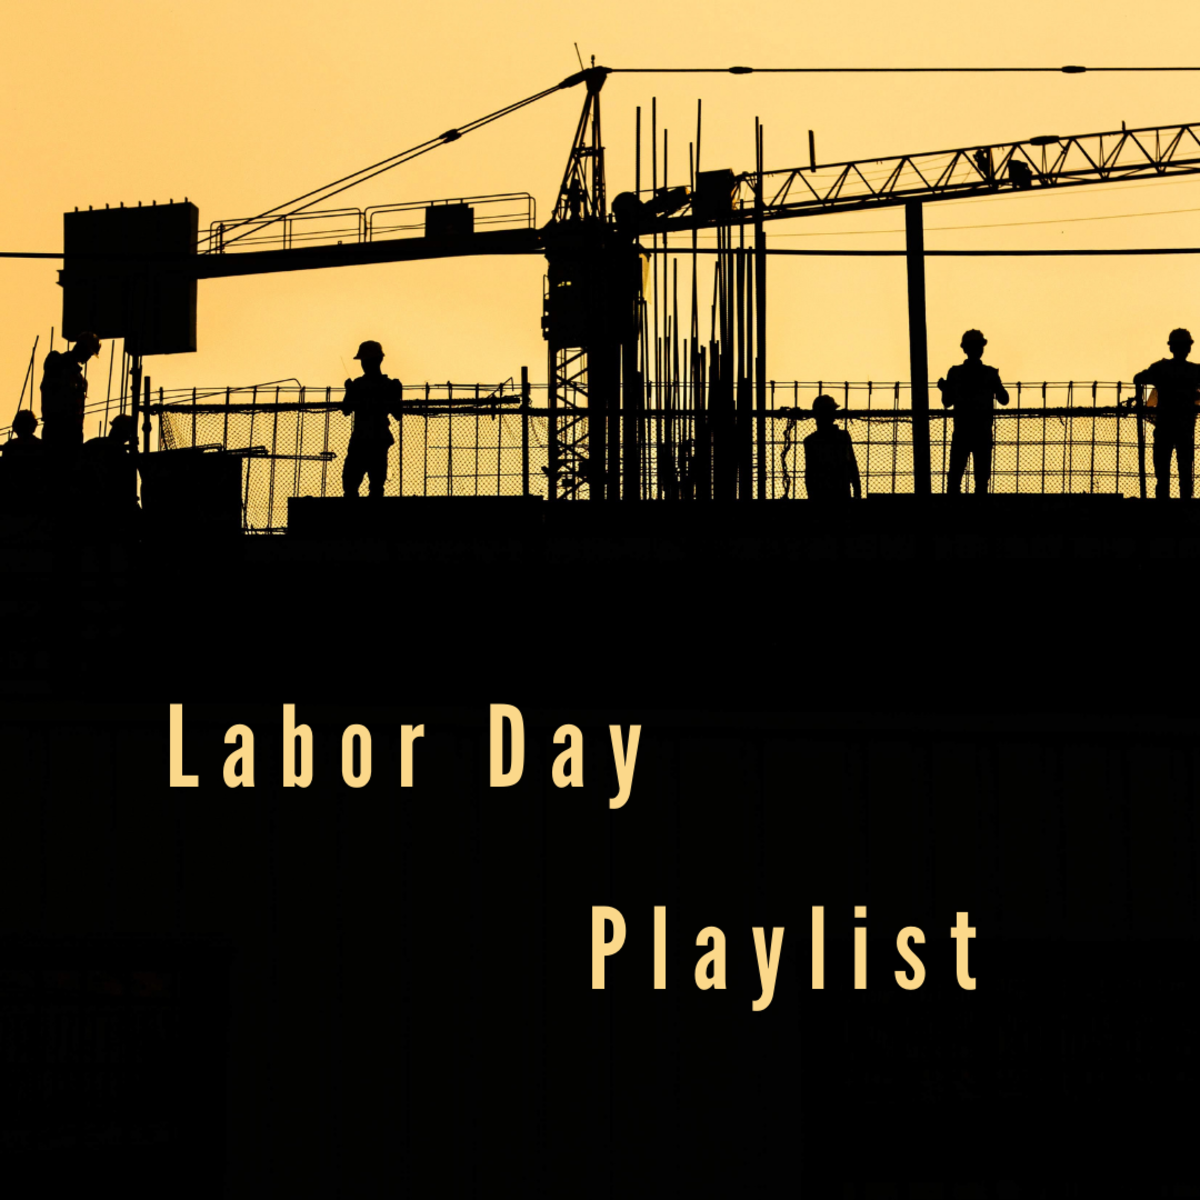 Listen to this Labor Day playlist!